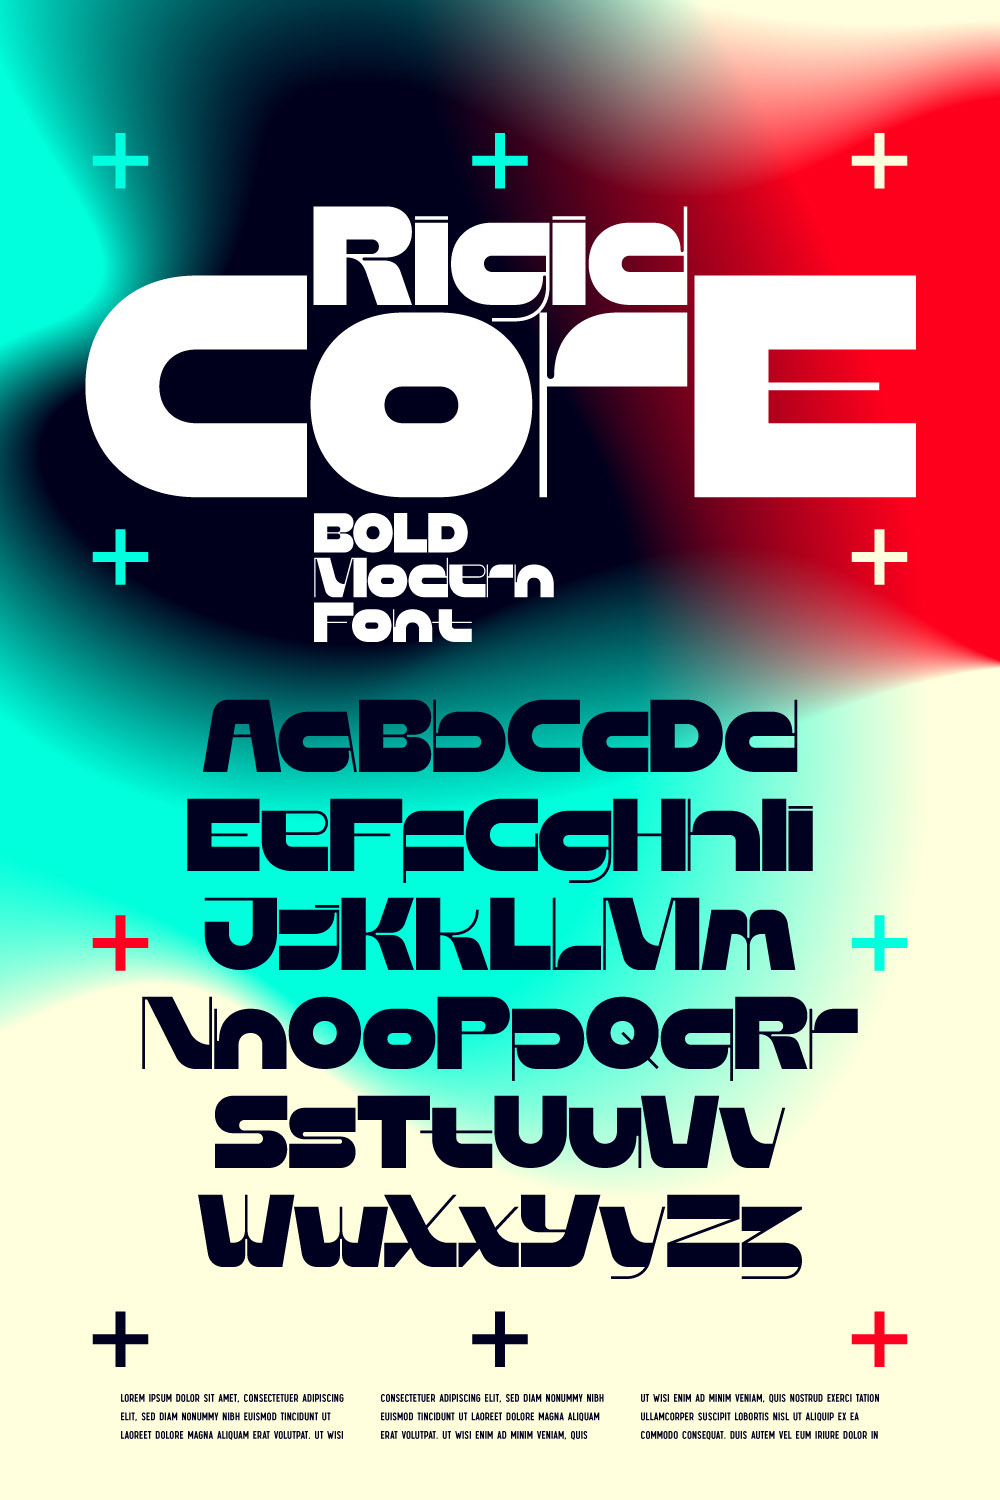 Rigid Core — Modern Font pinterest preview image.